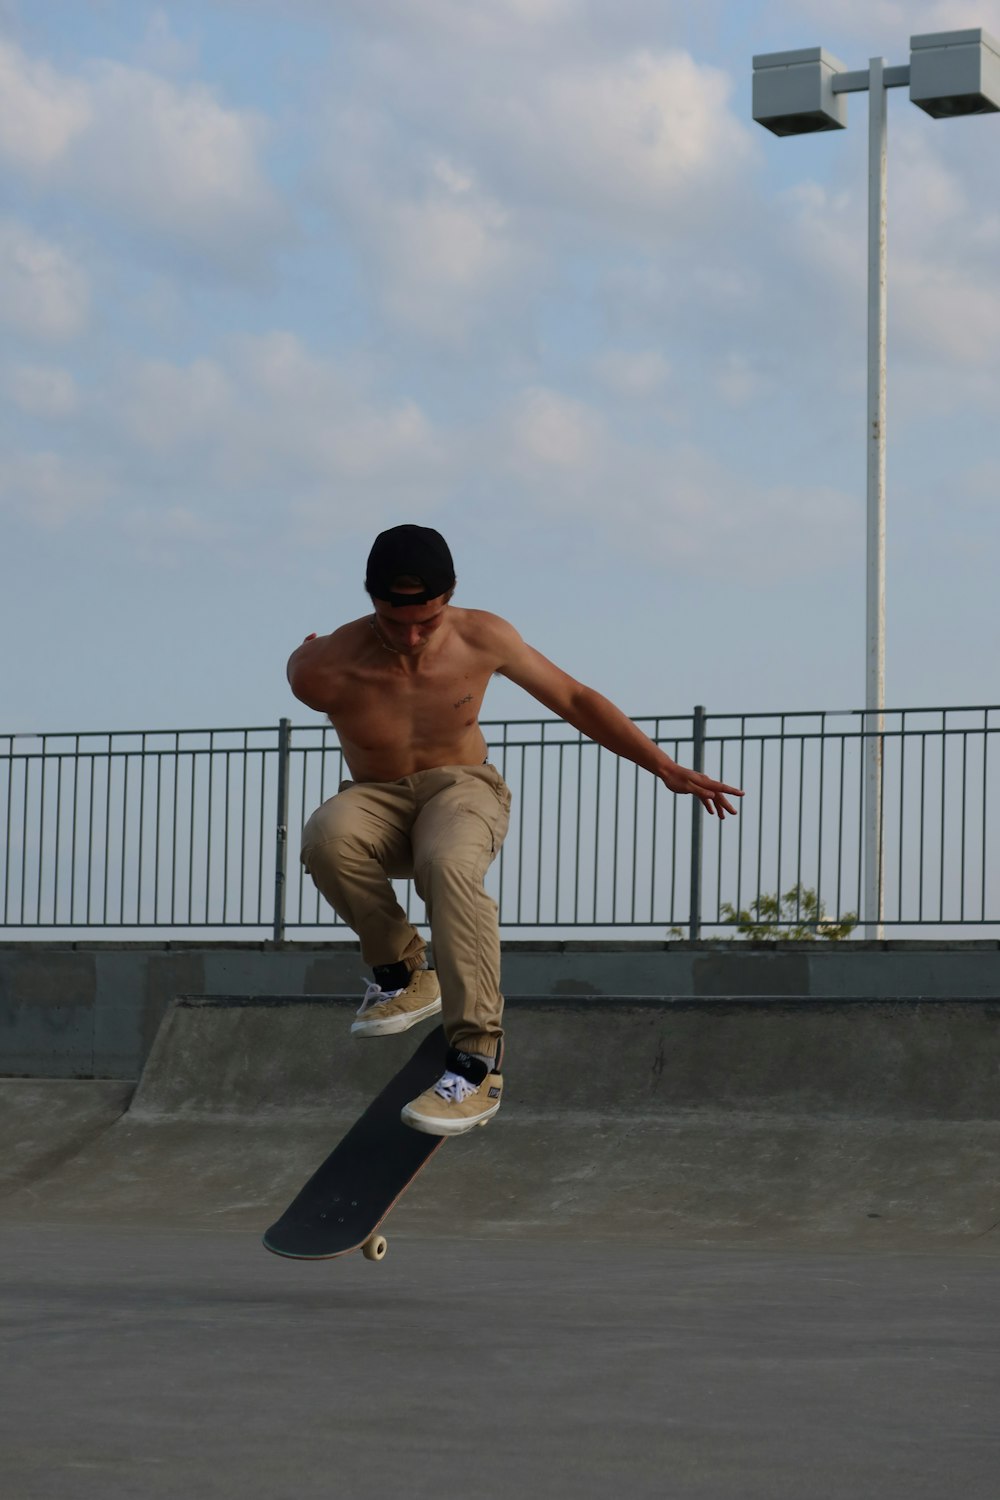 a shirtless man doing a trick on a skateboard